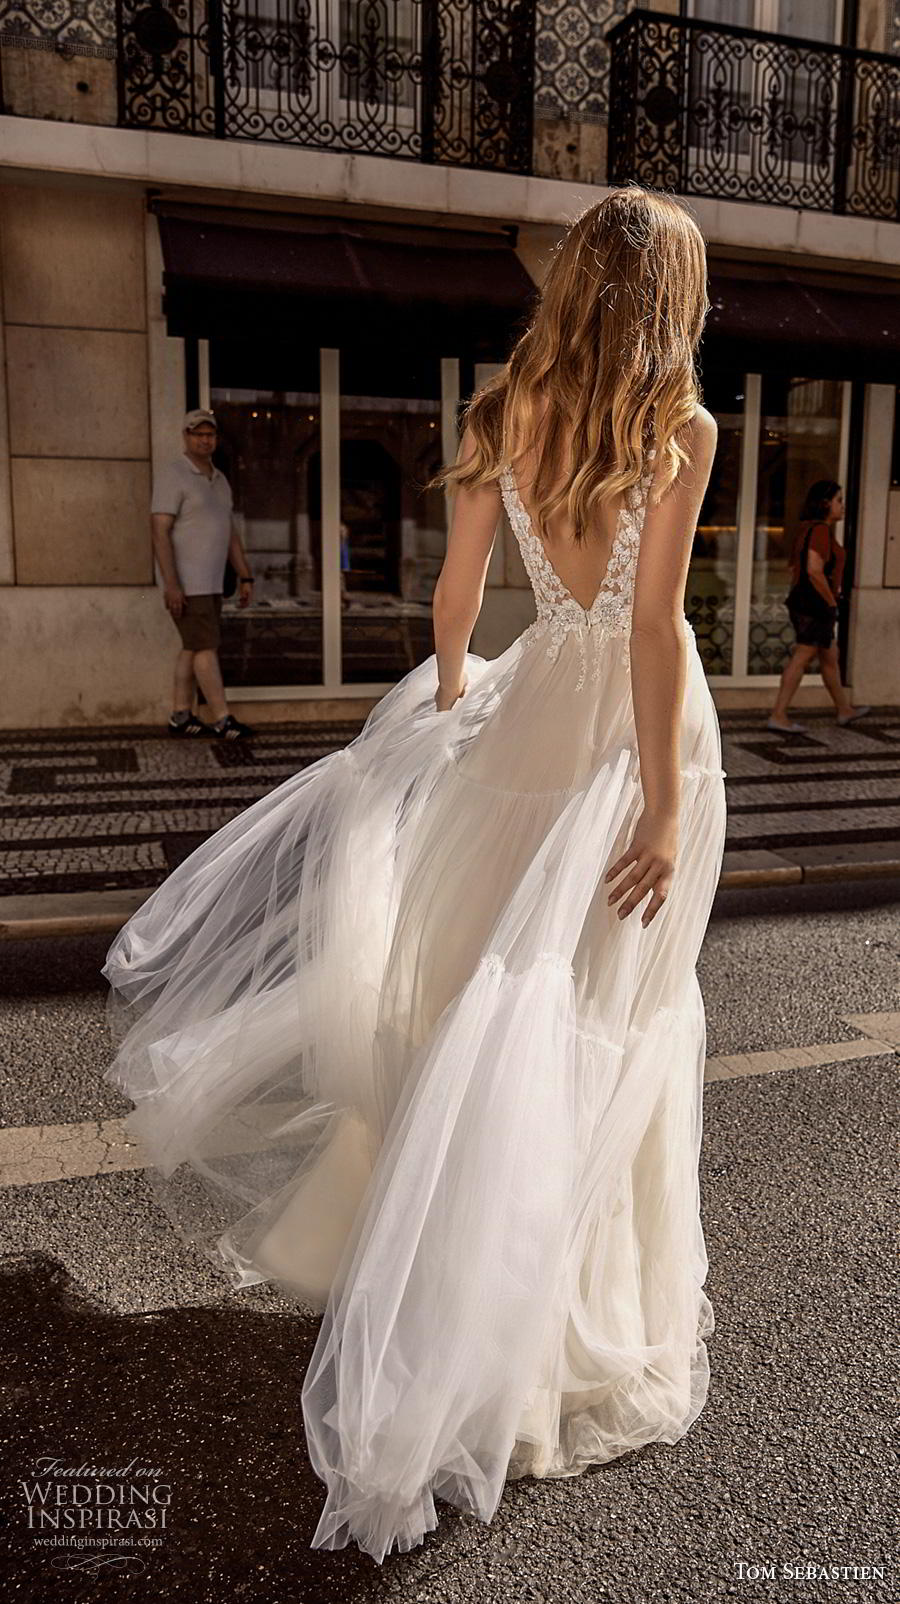 tom sebastian 2019 bridal sleeveless deep v neck heavily embellished bodice romantic a  line wedding dress open v back sweep train (2) bv